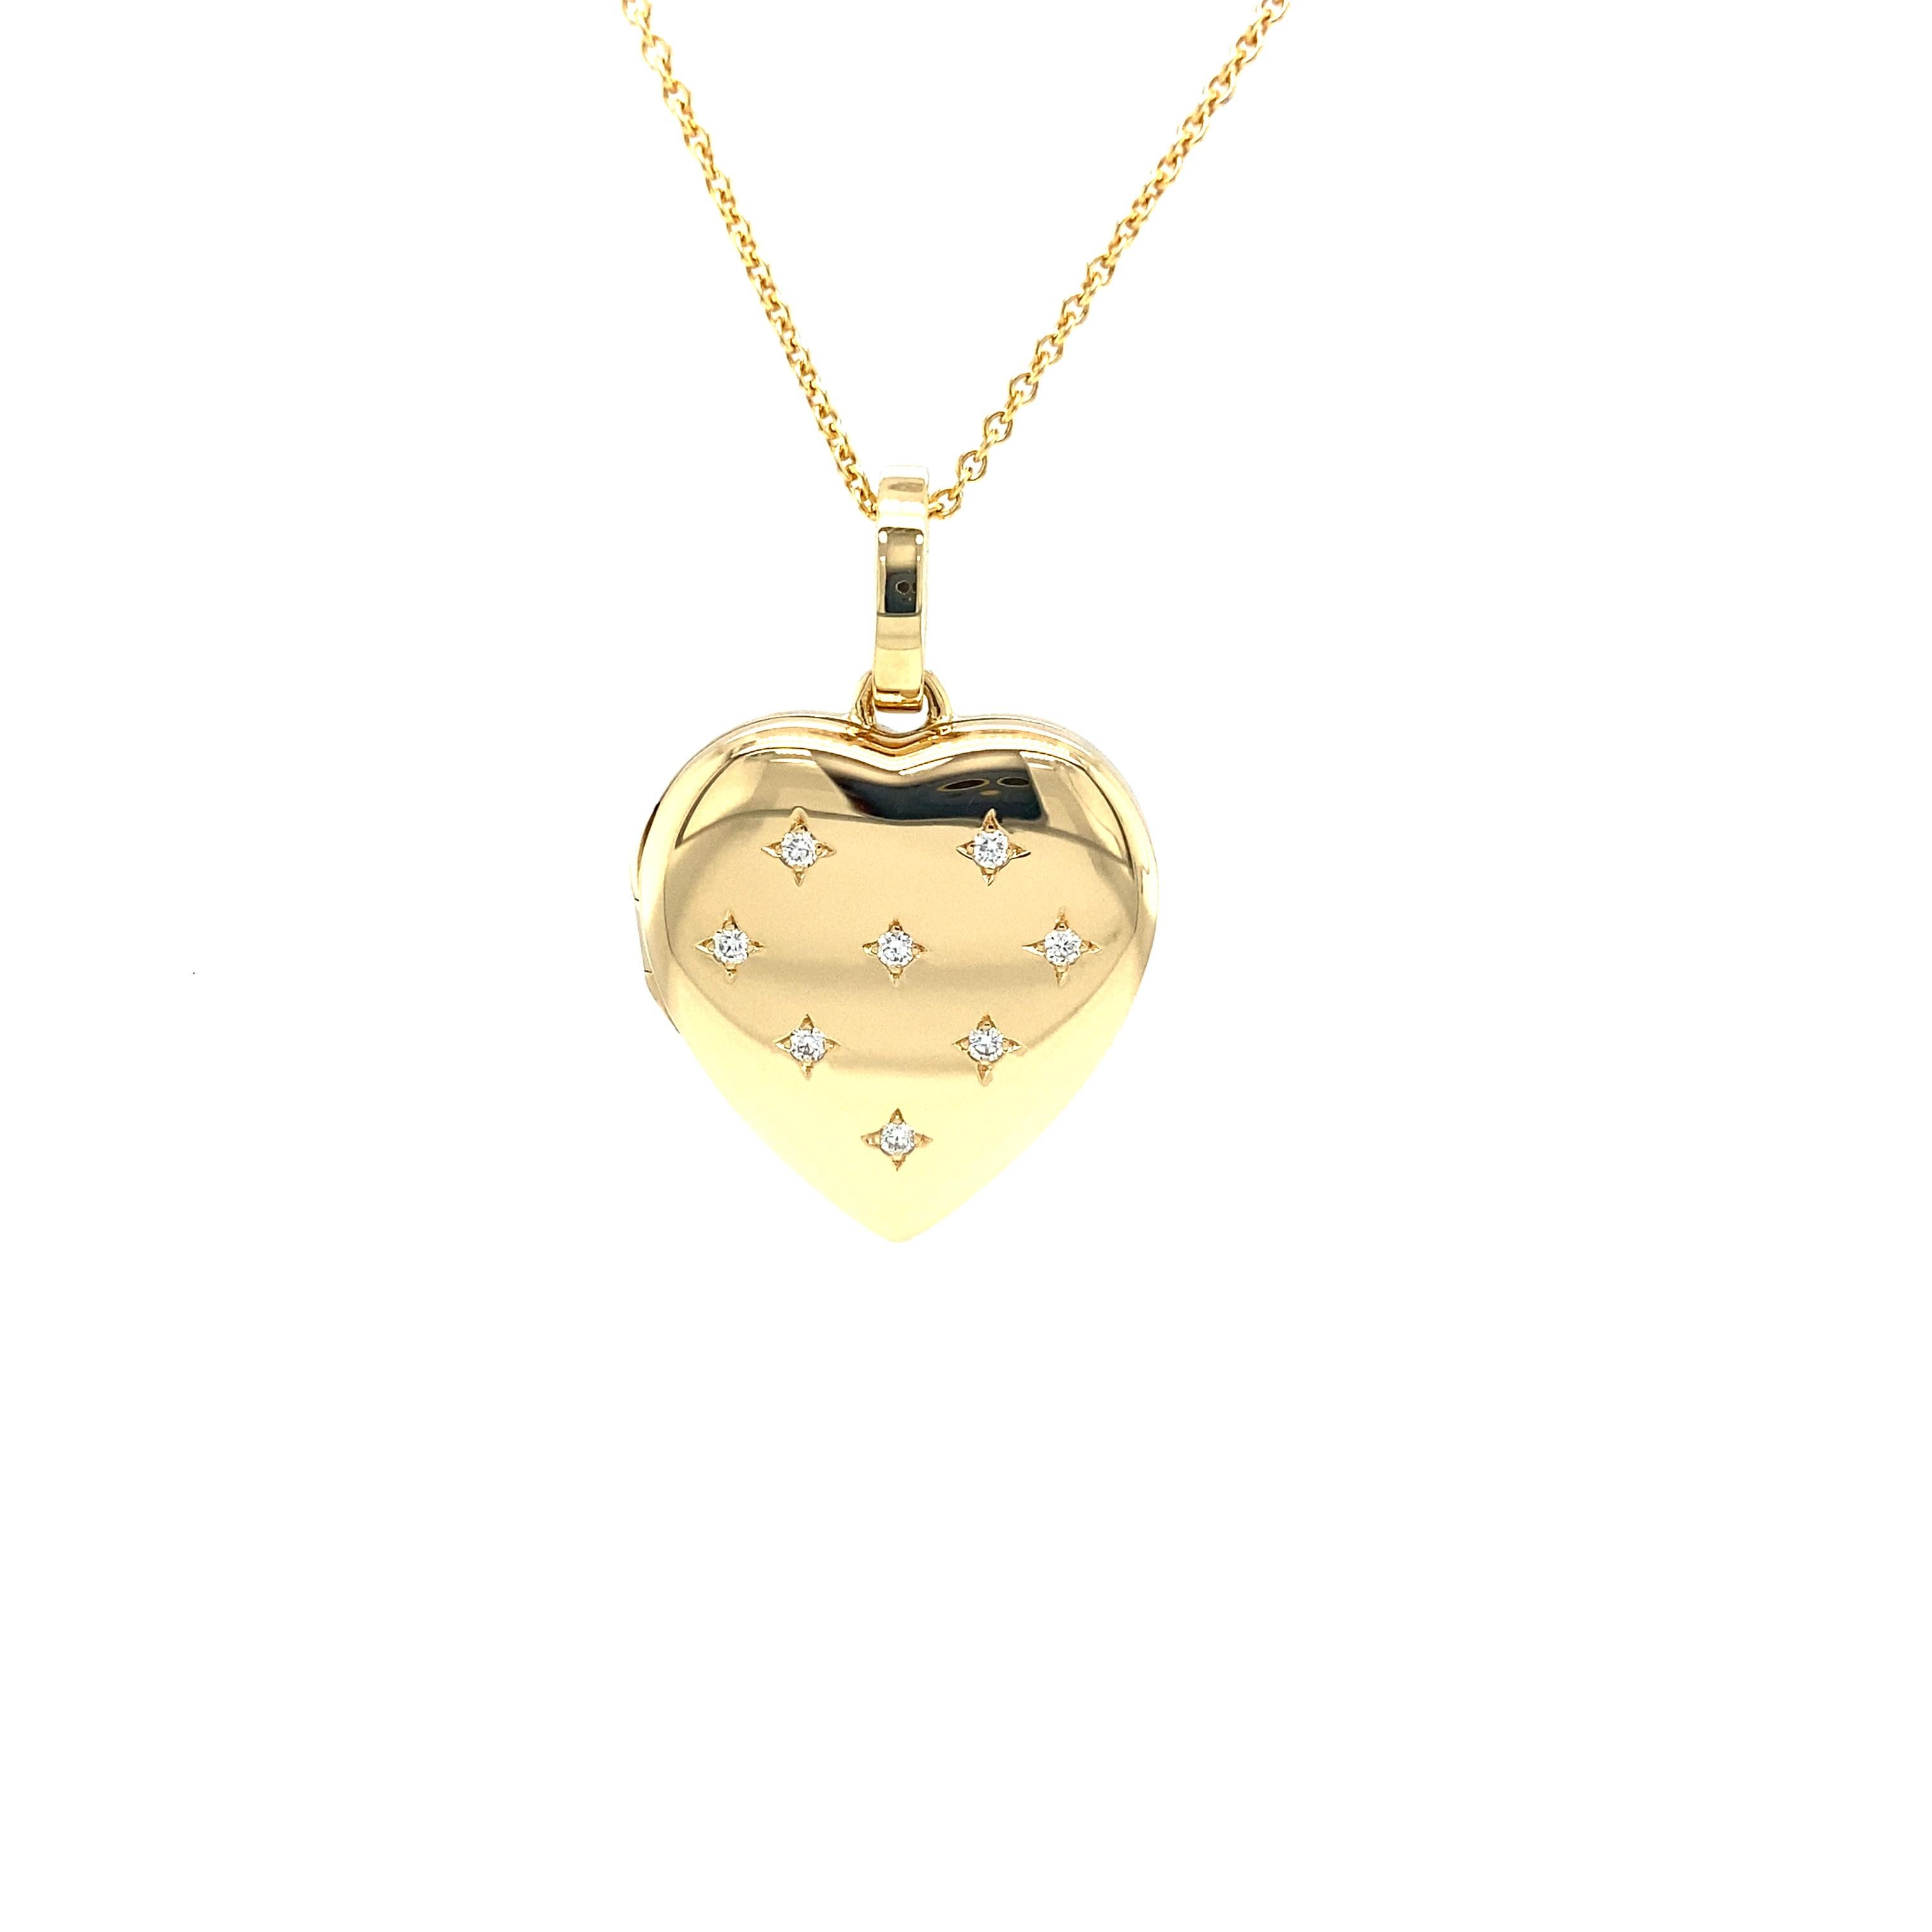 Taille brillant Pendentif médaillon en forme de cœur de Victor Mayer, or jaune 18 carats, 8 diamants 0,16 carat en vente